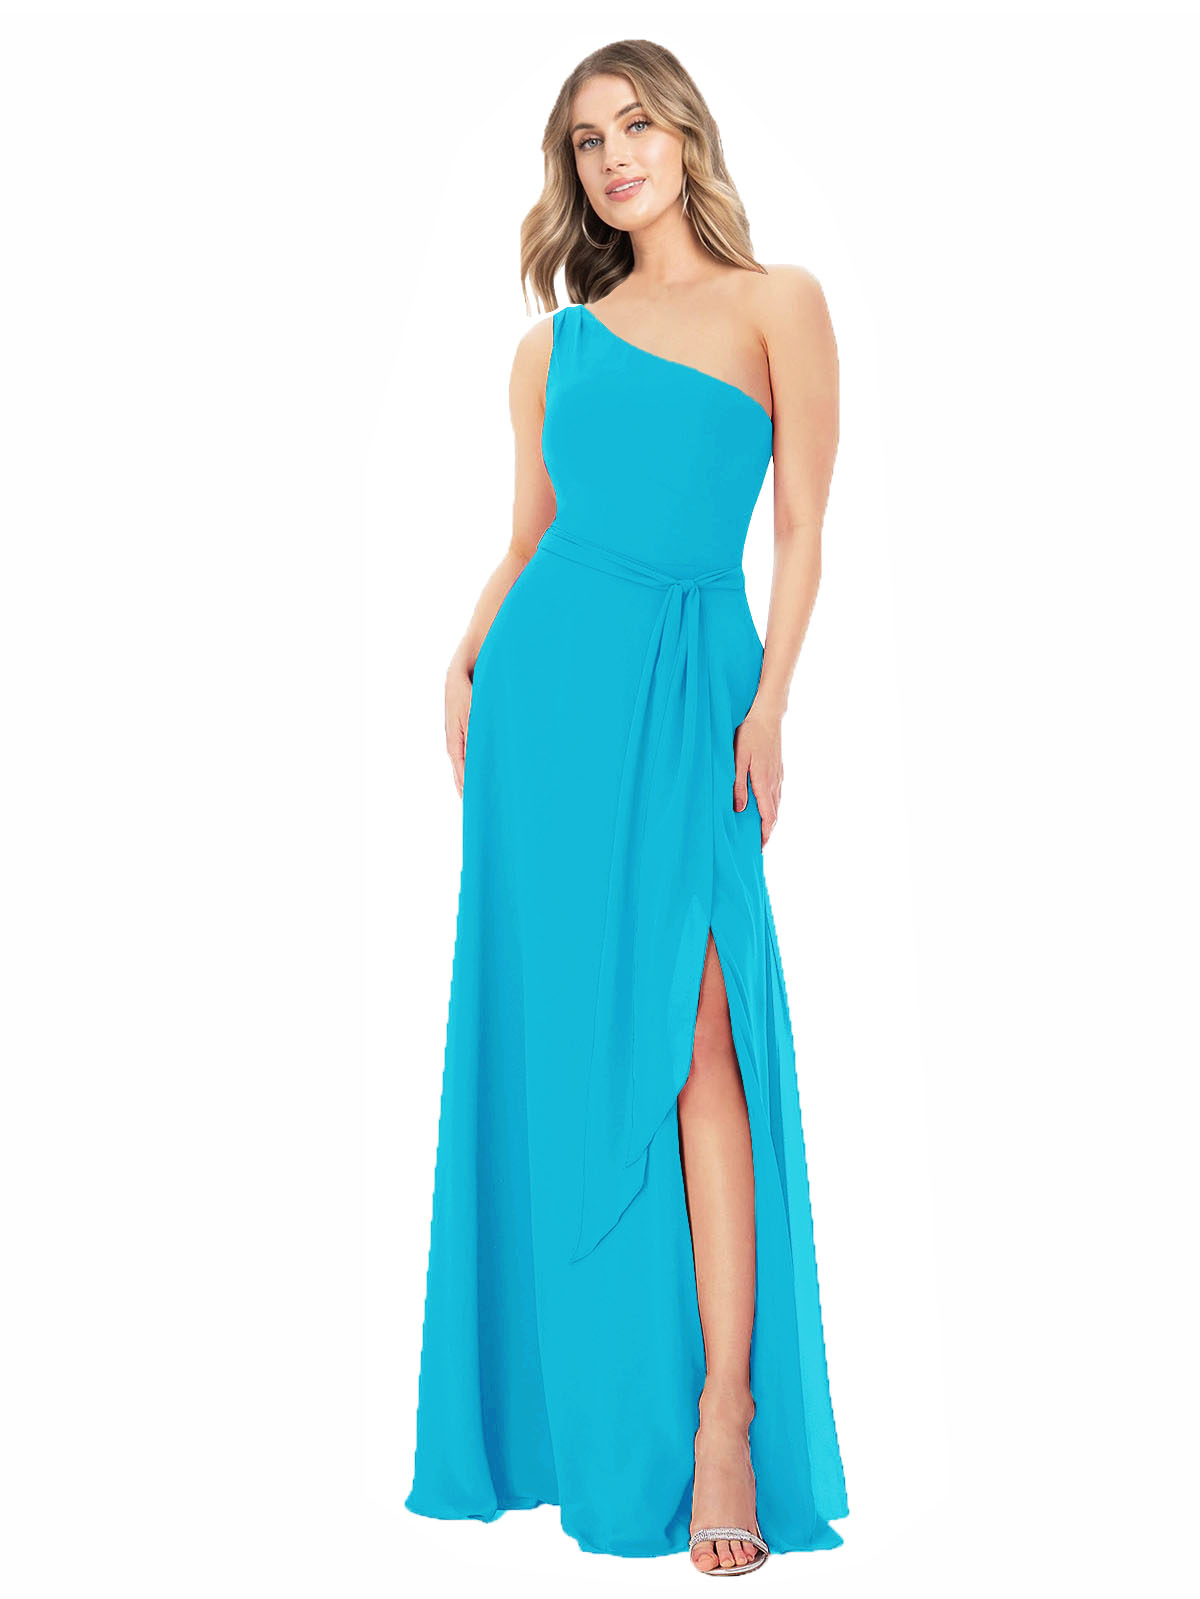 Turquoise A-Line One Shoulder Sleeveless Long Bridesmaid Dress Doris